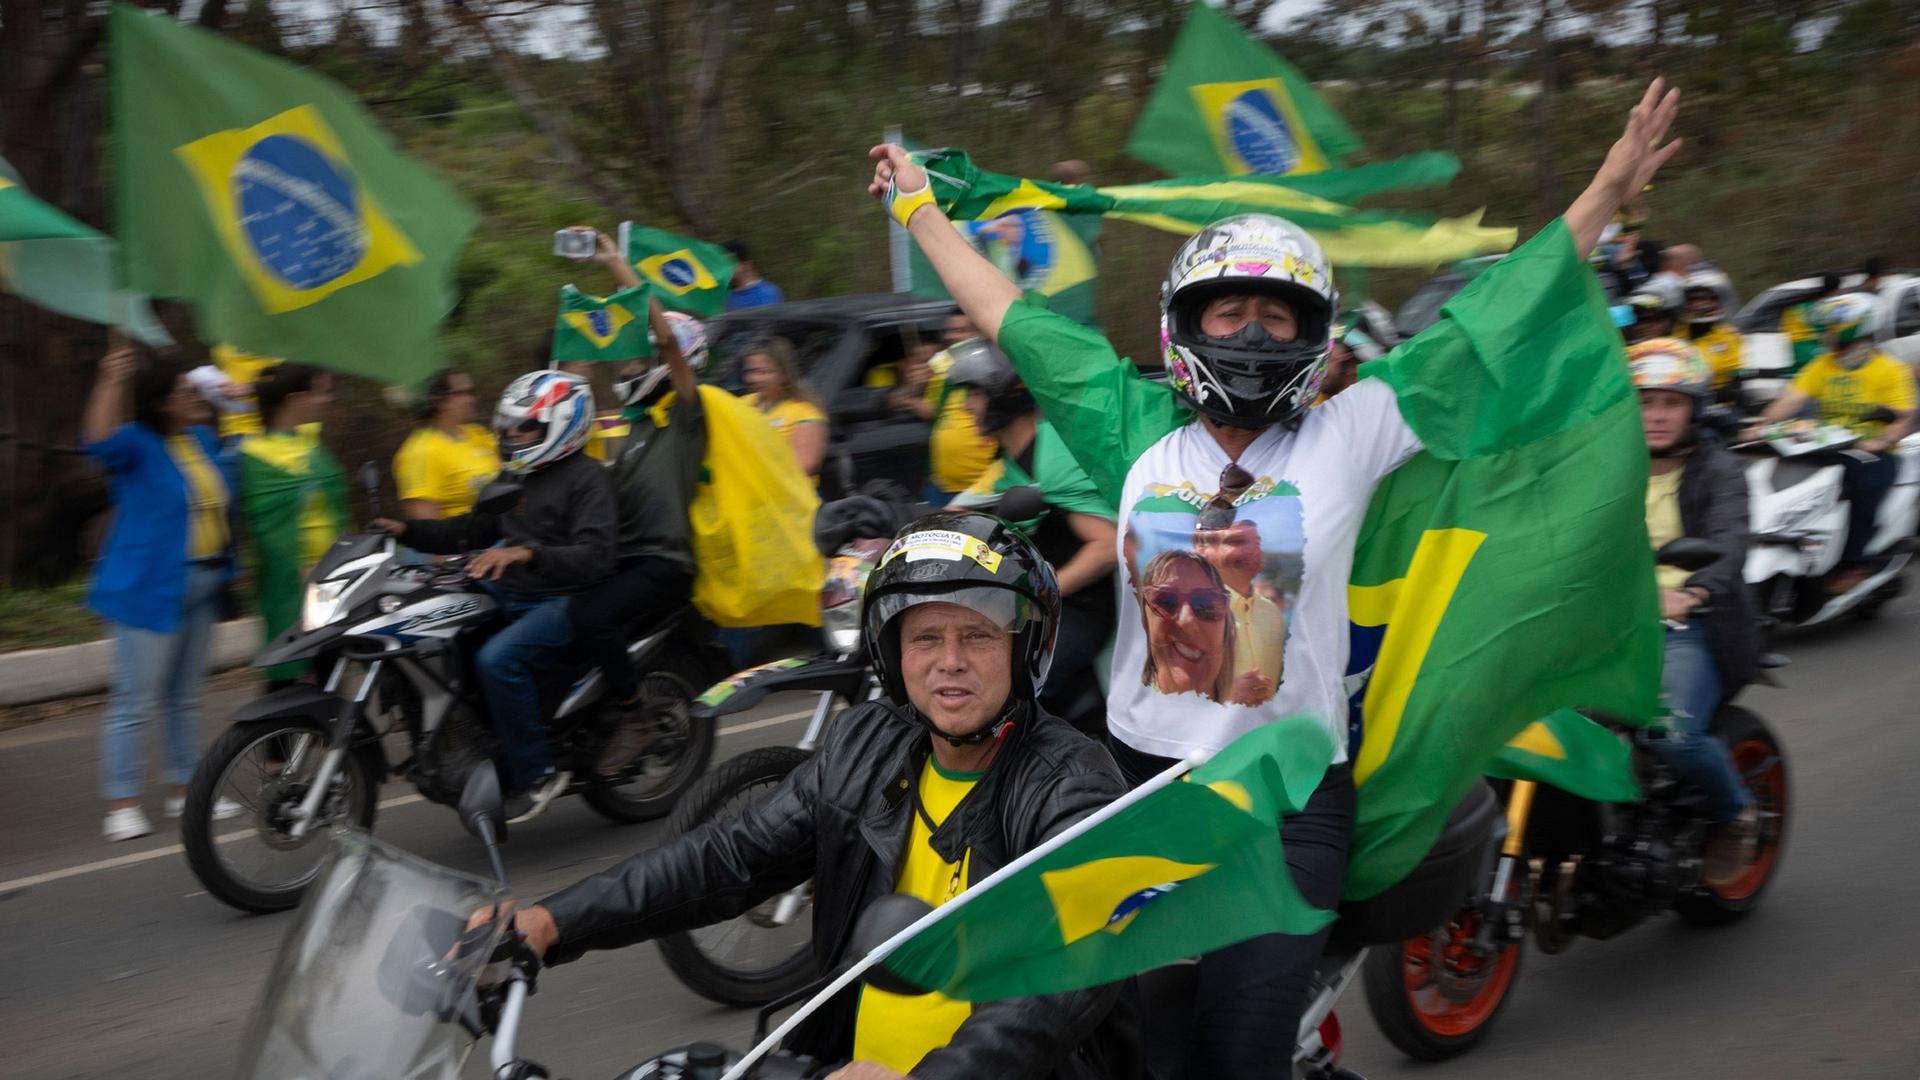 Supporters of Brazilian President Jair Bolsonaro wave Brazilian flags during a motorcycle campaign rally in Pocos de Caldas, Brazil